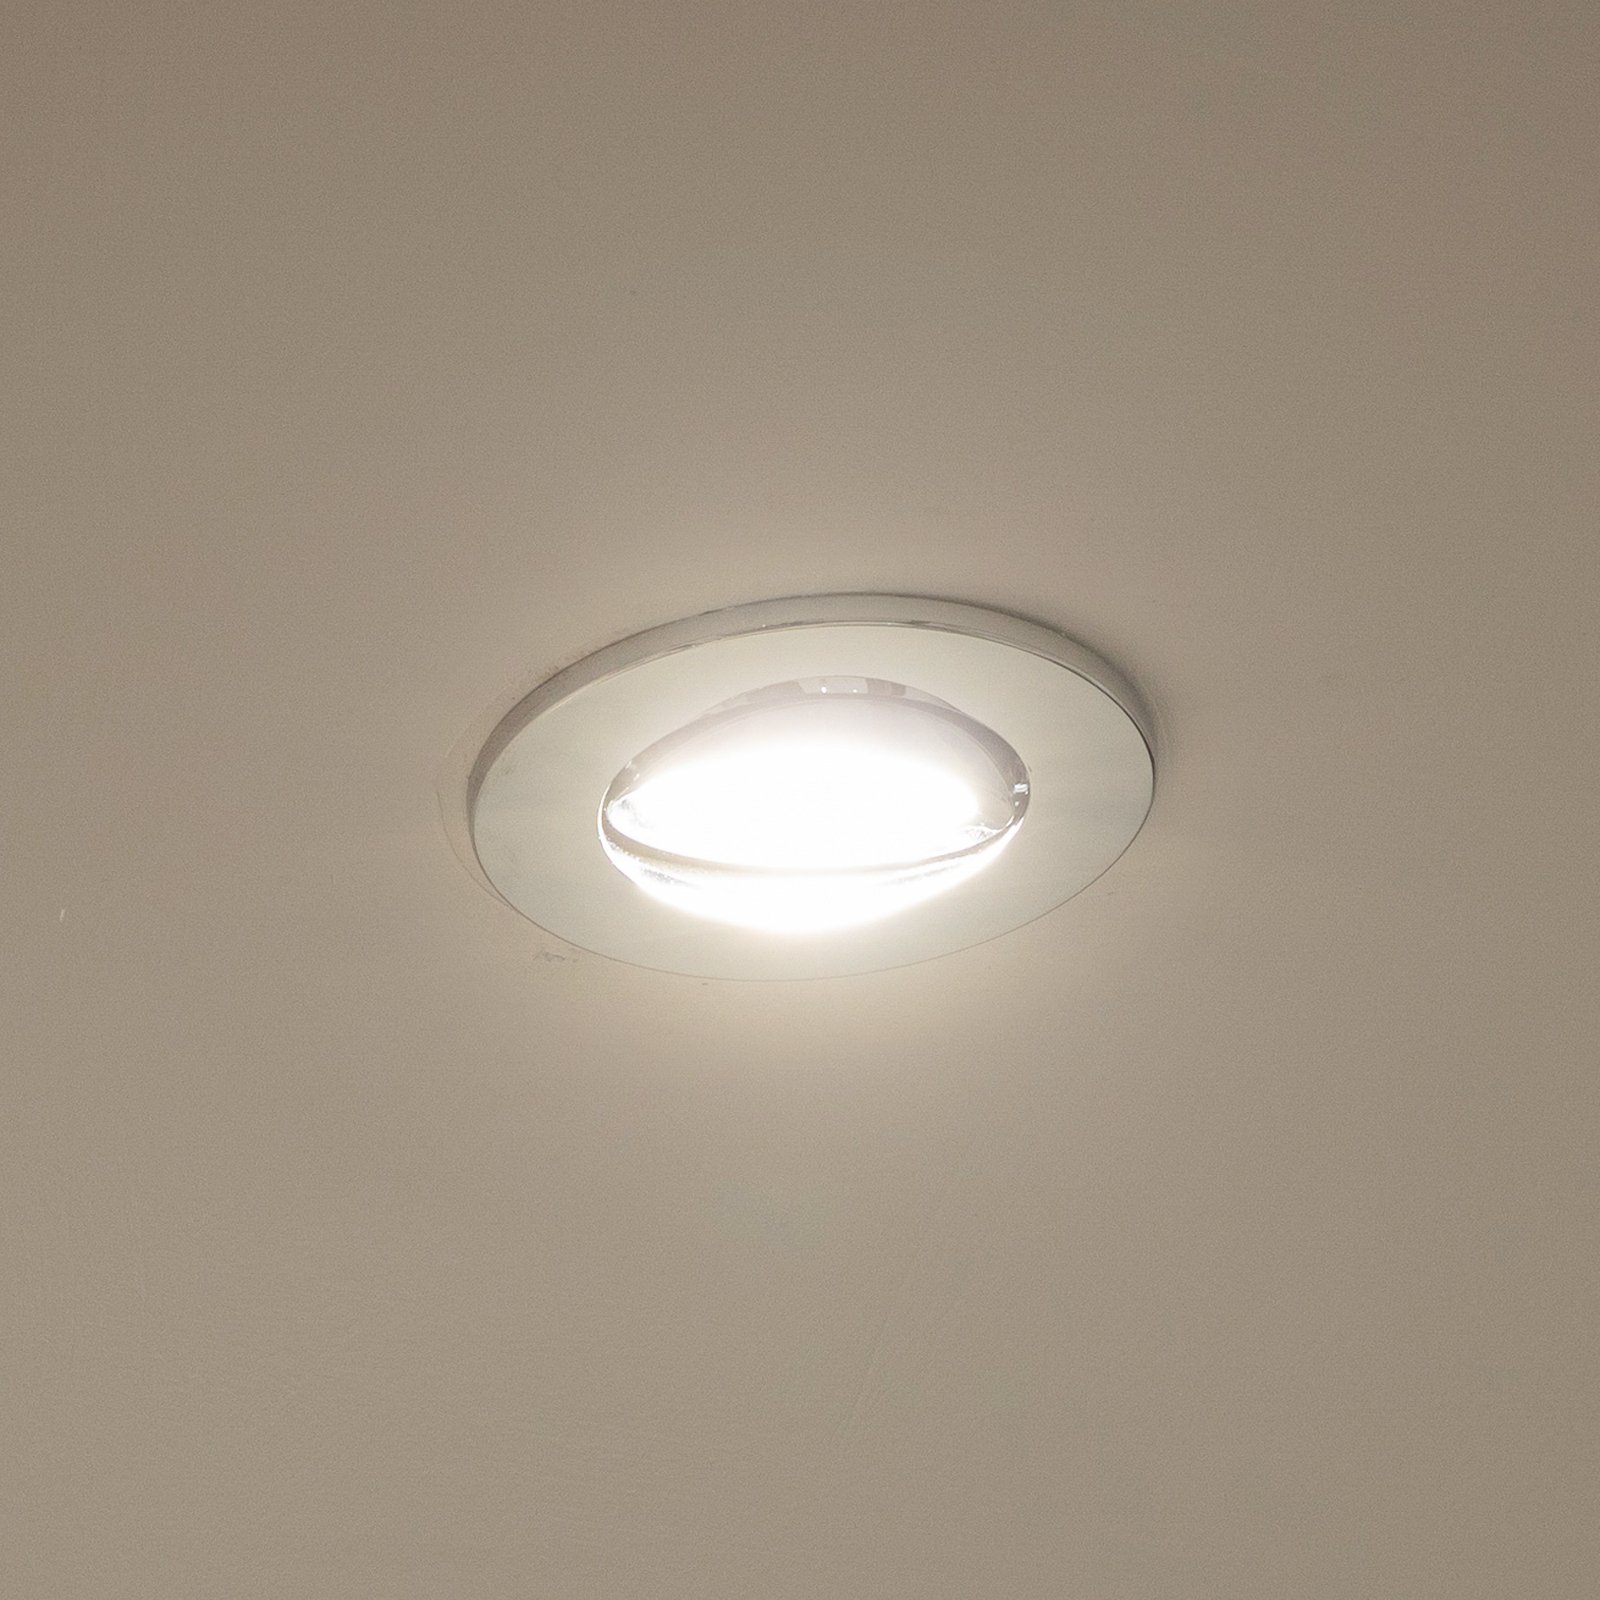 Arcchio Cyrian LED-es süllyesztett lámpa, IP65, króm, króm